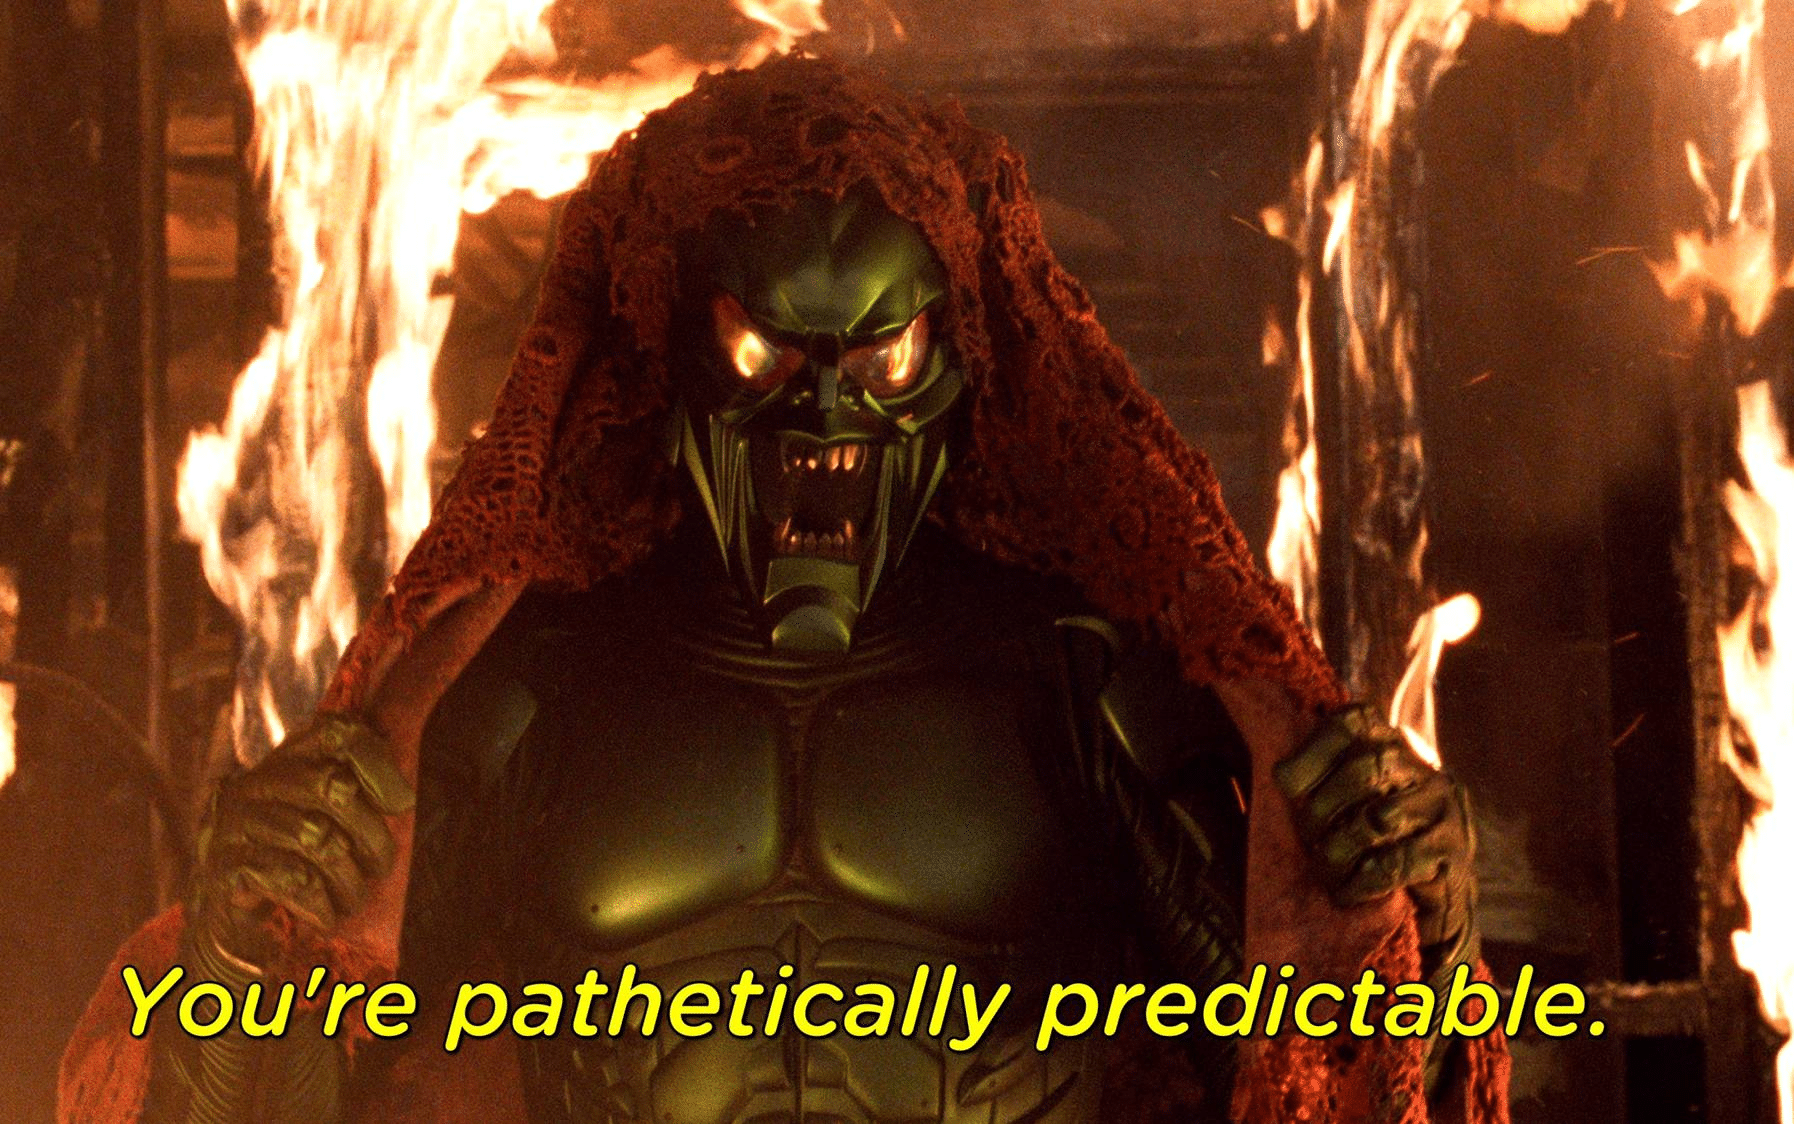 Green Goblin 'You are pathetically predictable' Spiderman meme template blank